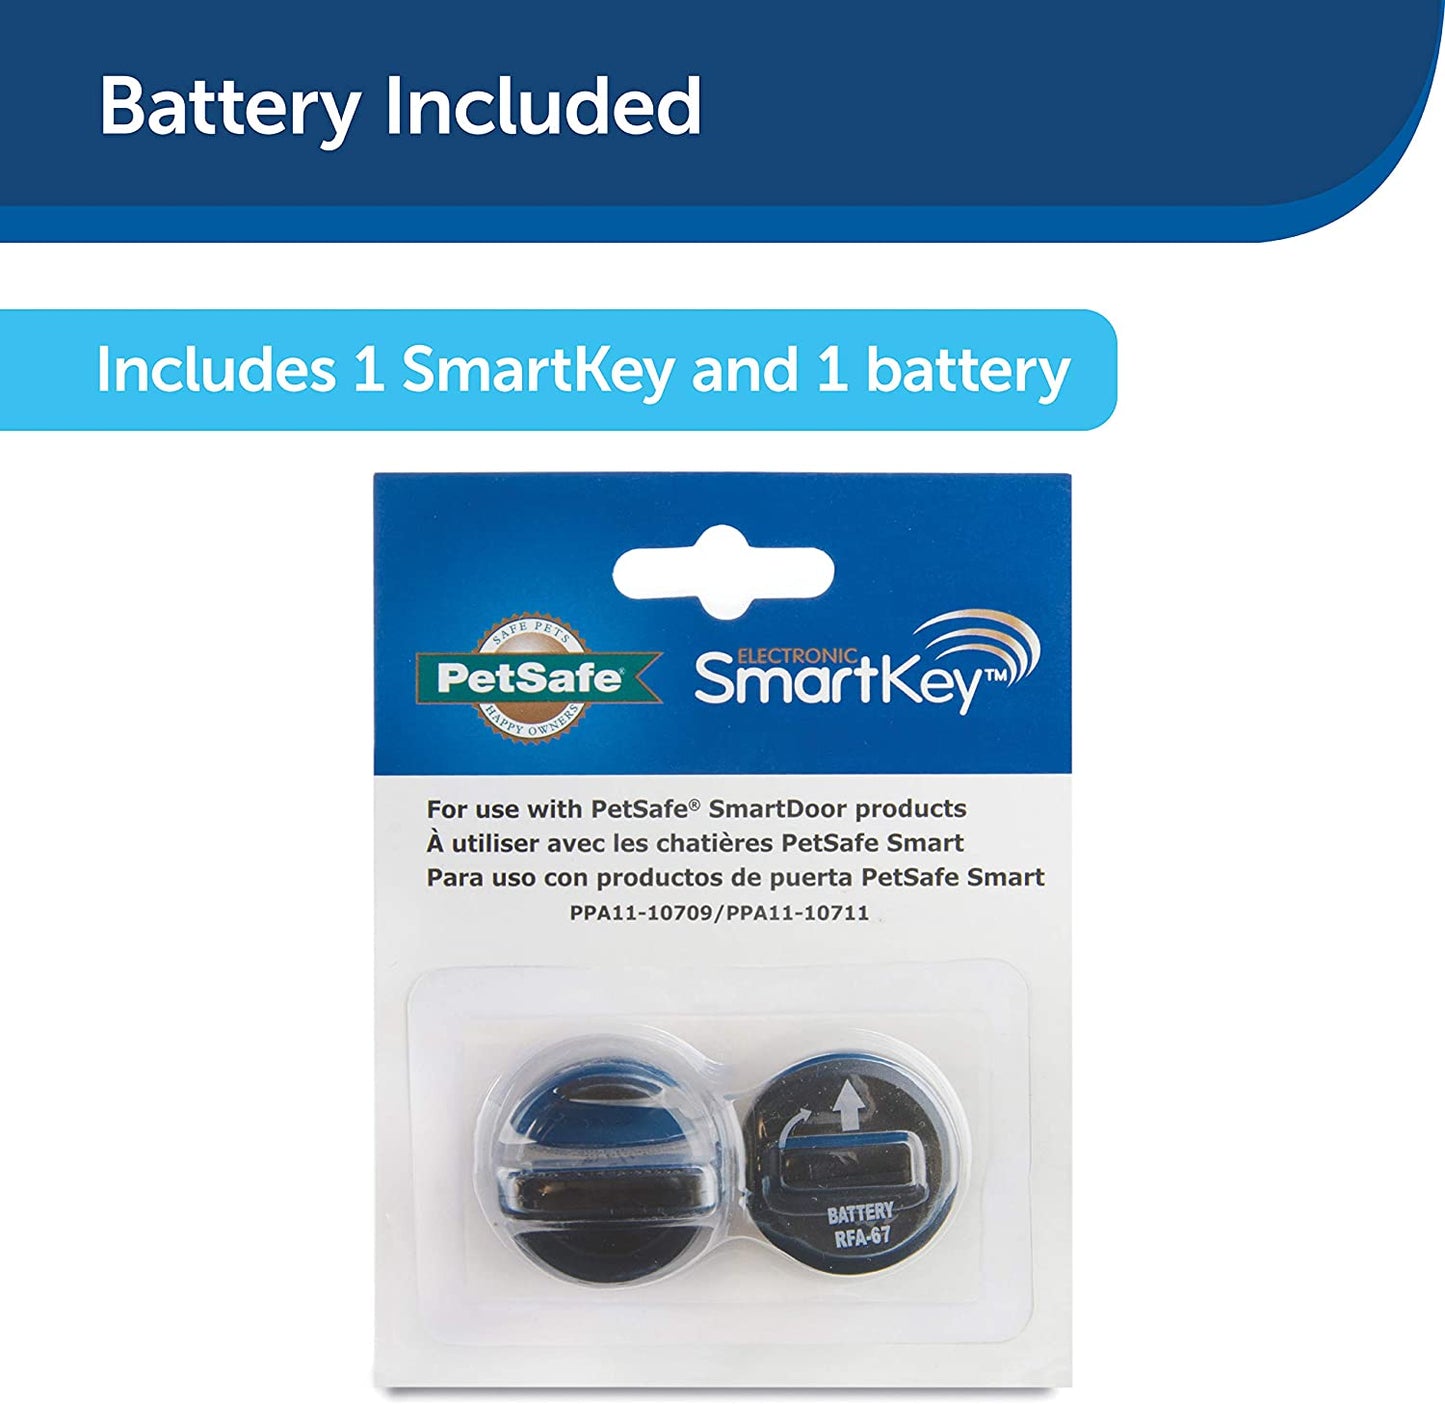 PetSafe Electronic SmartKey for PetSafe Electronic SmartDoor - PAC11-11045